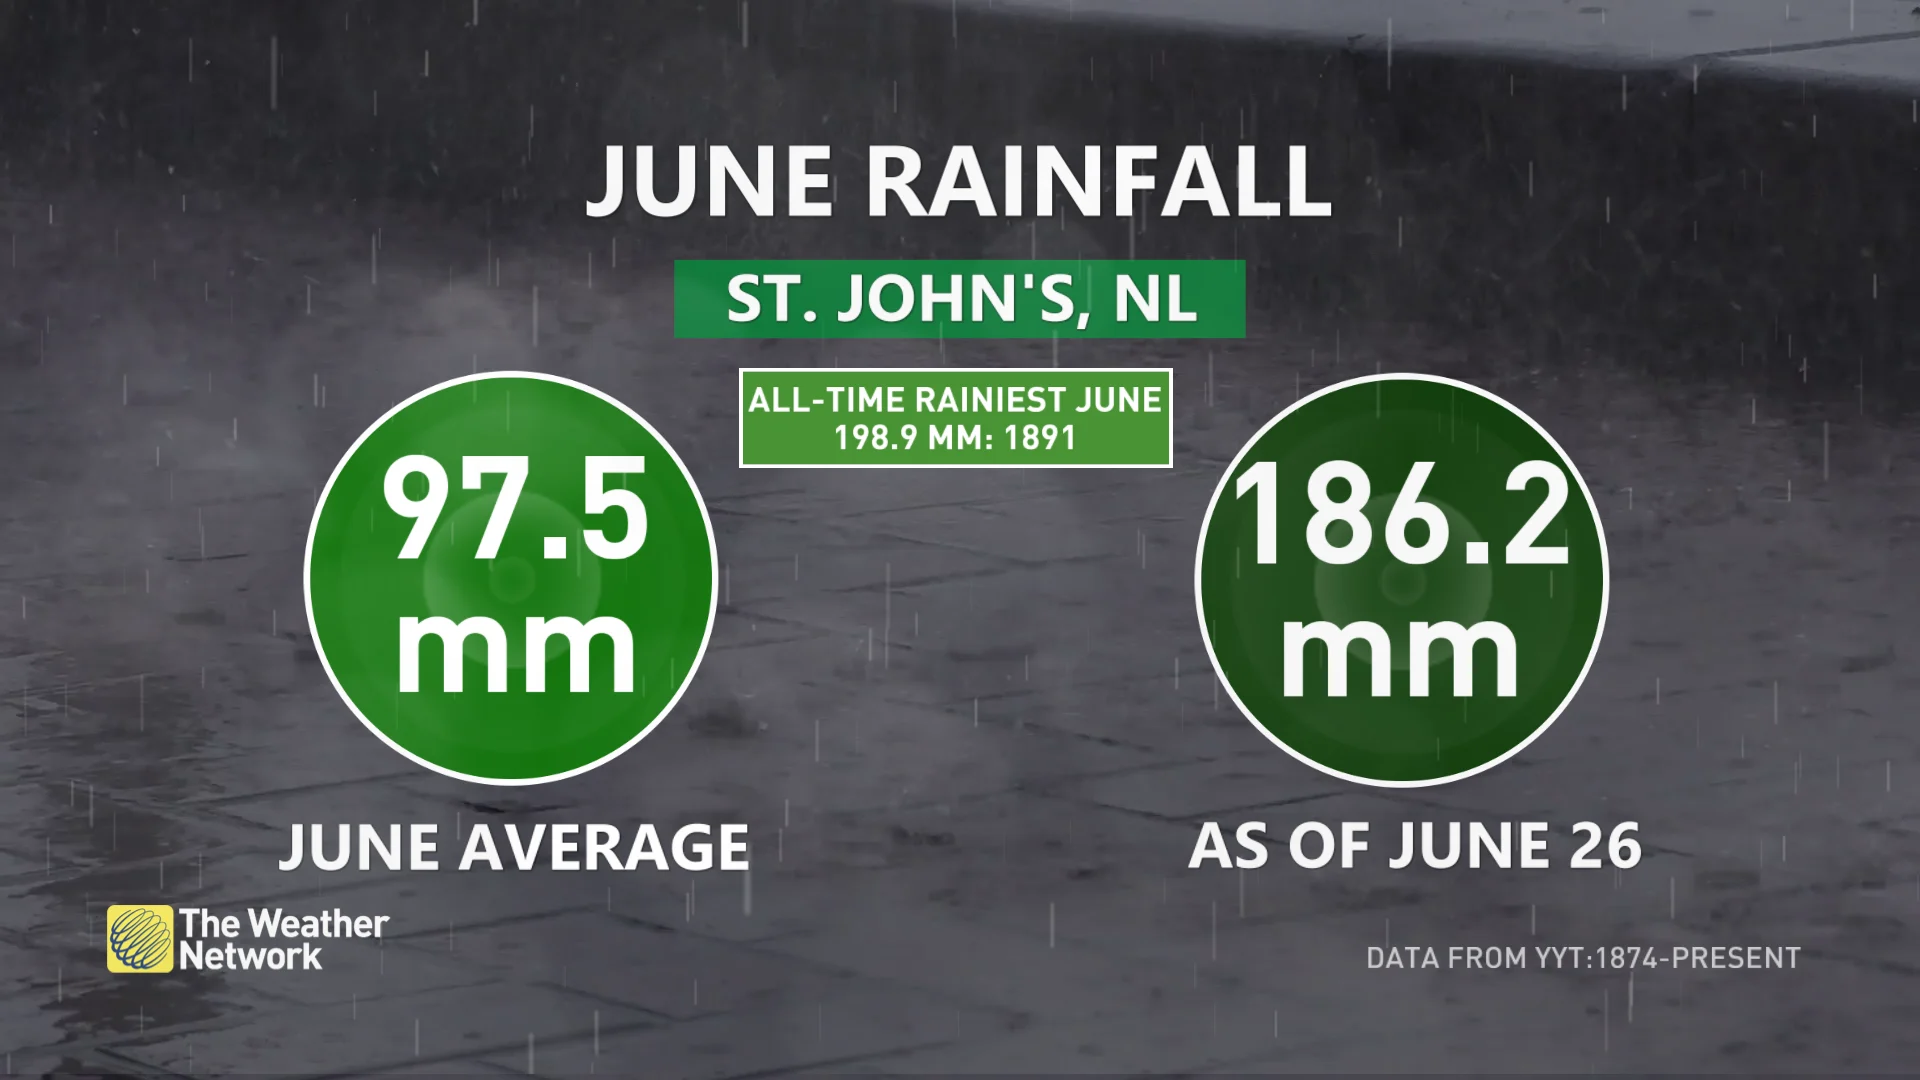 Baron - St. Johns NL June rain